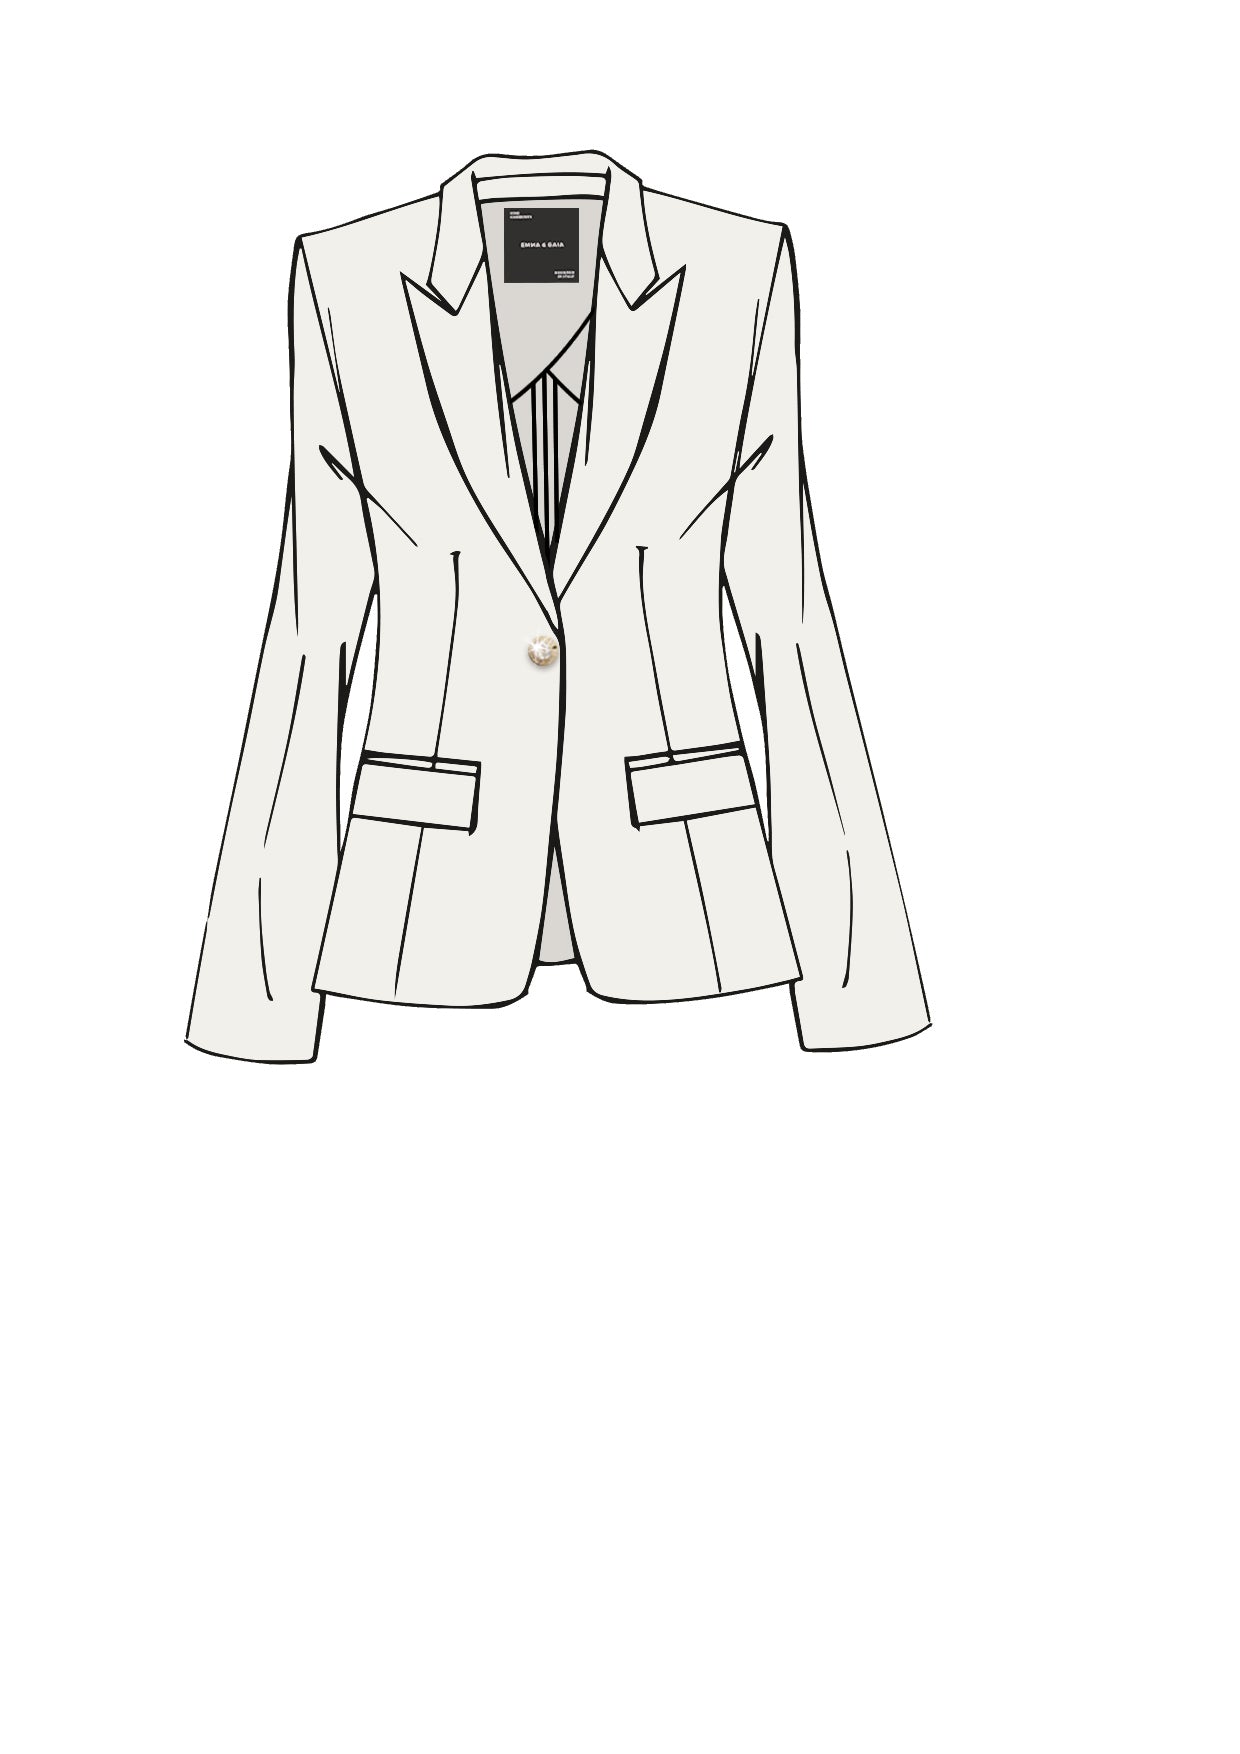 One-button blazer with tuxedo-style collar